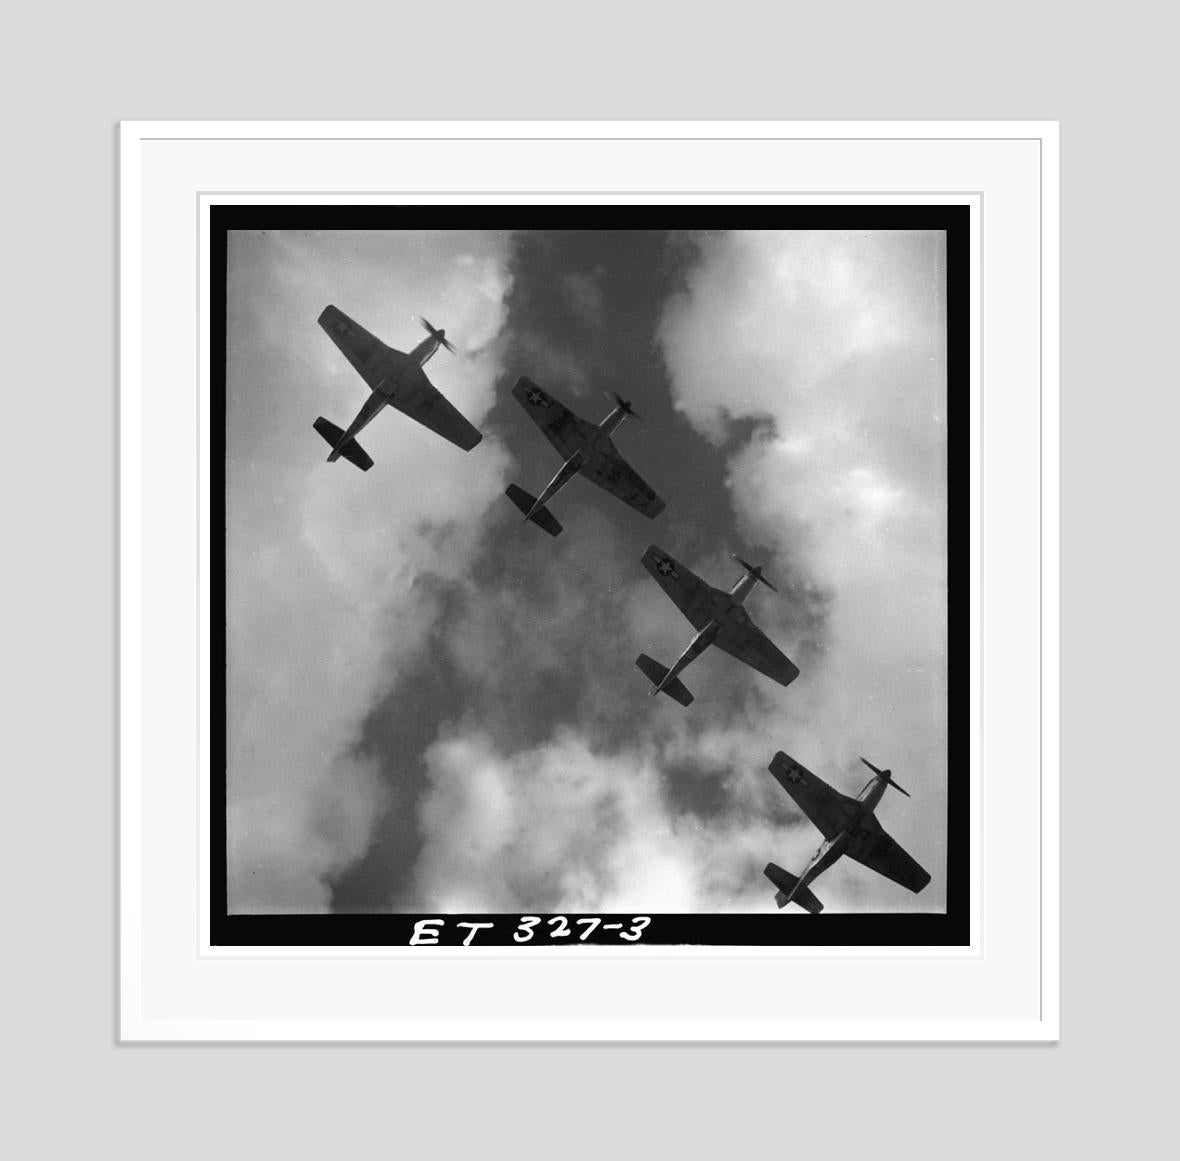 Mustangs en vol

1945

Quatre P-51 Mustangs volent en formation, Ramitelli, Italie, 1945. 

par Toni Frissell

30 x 30